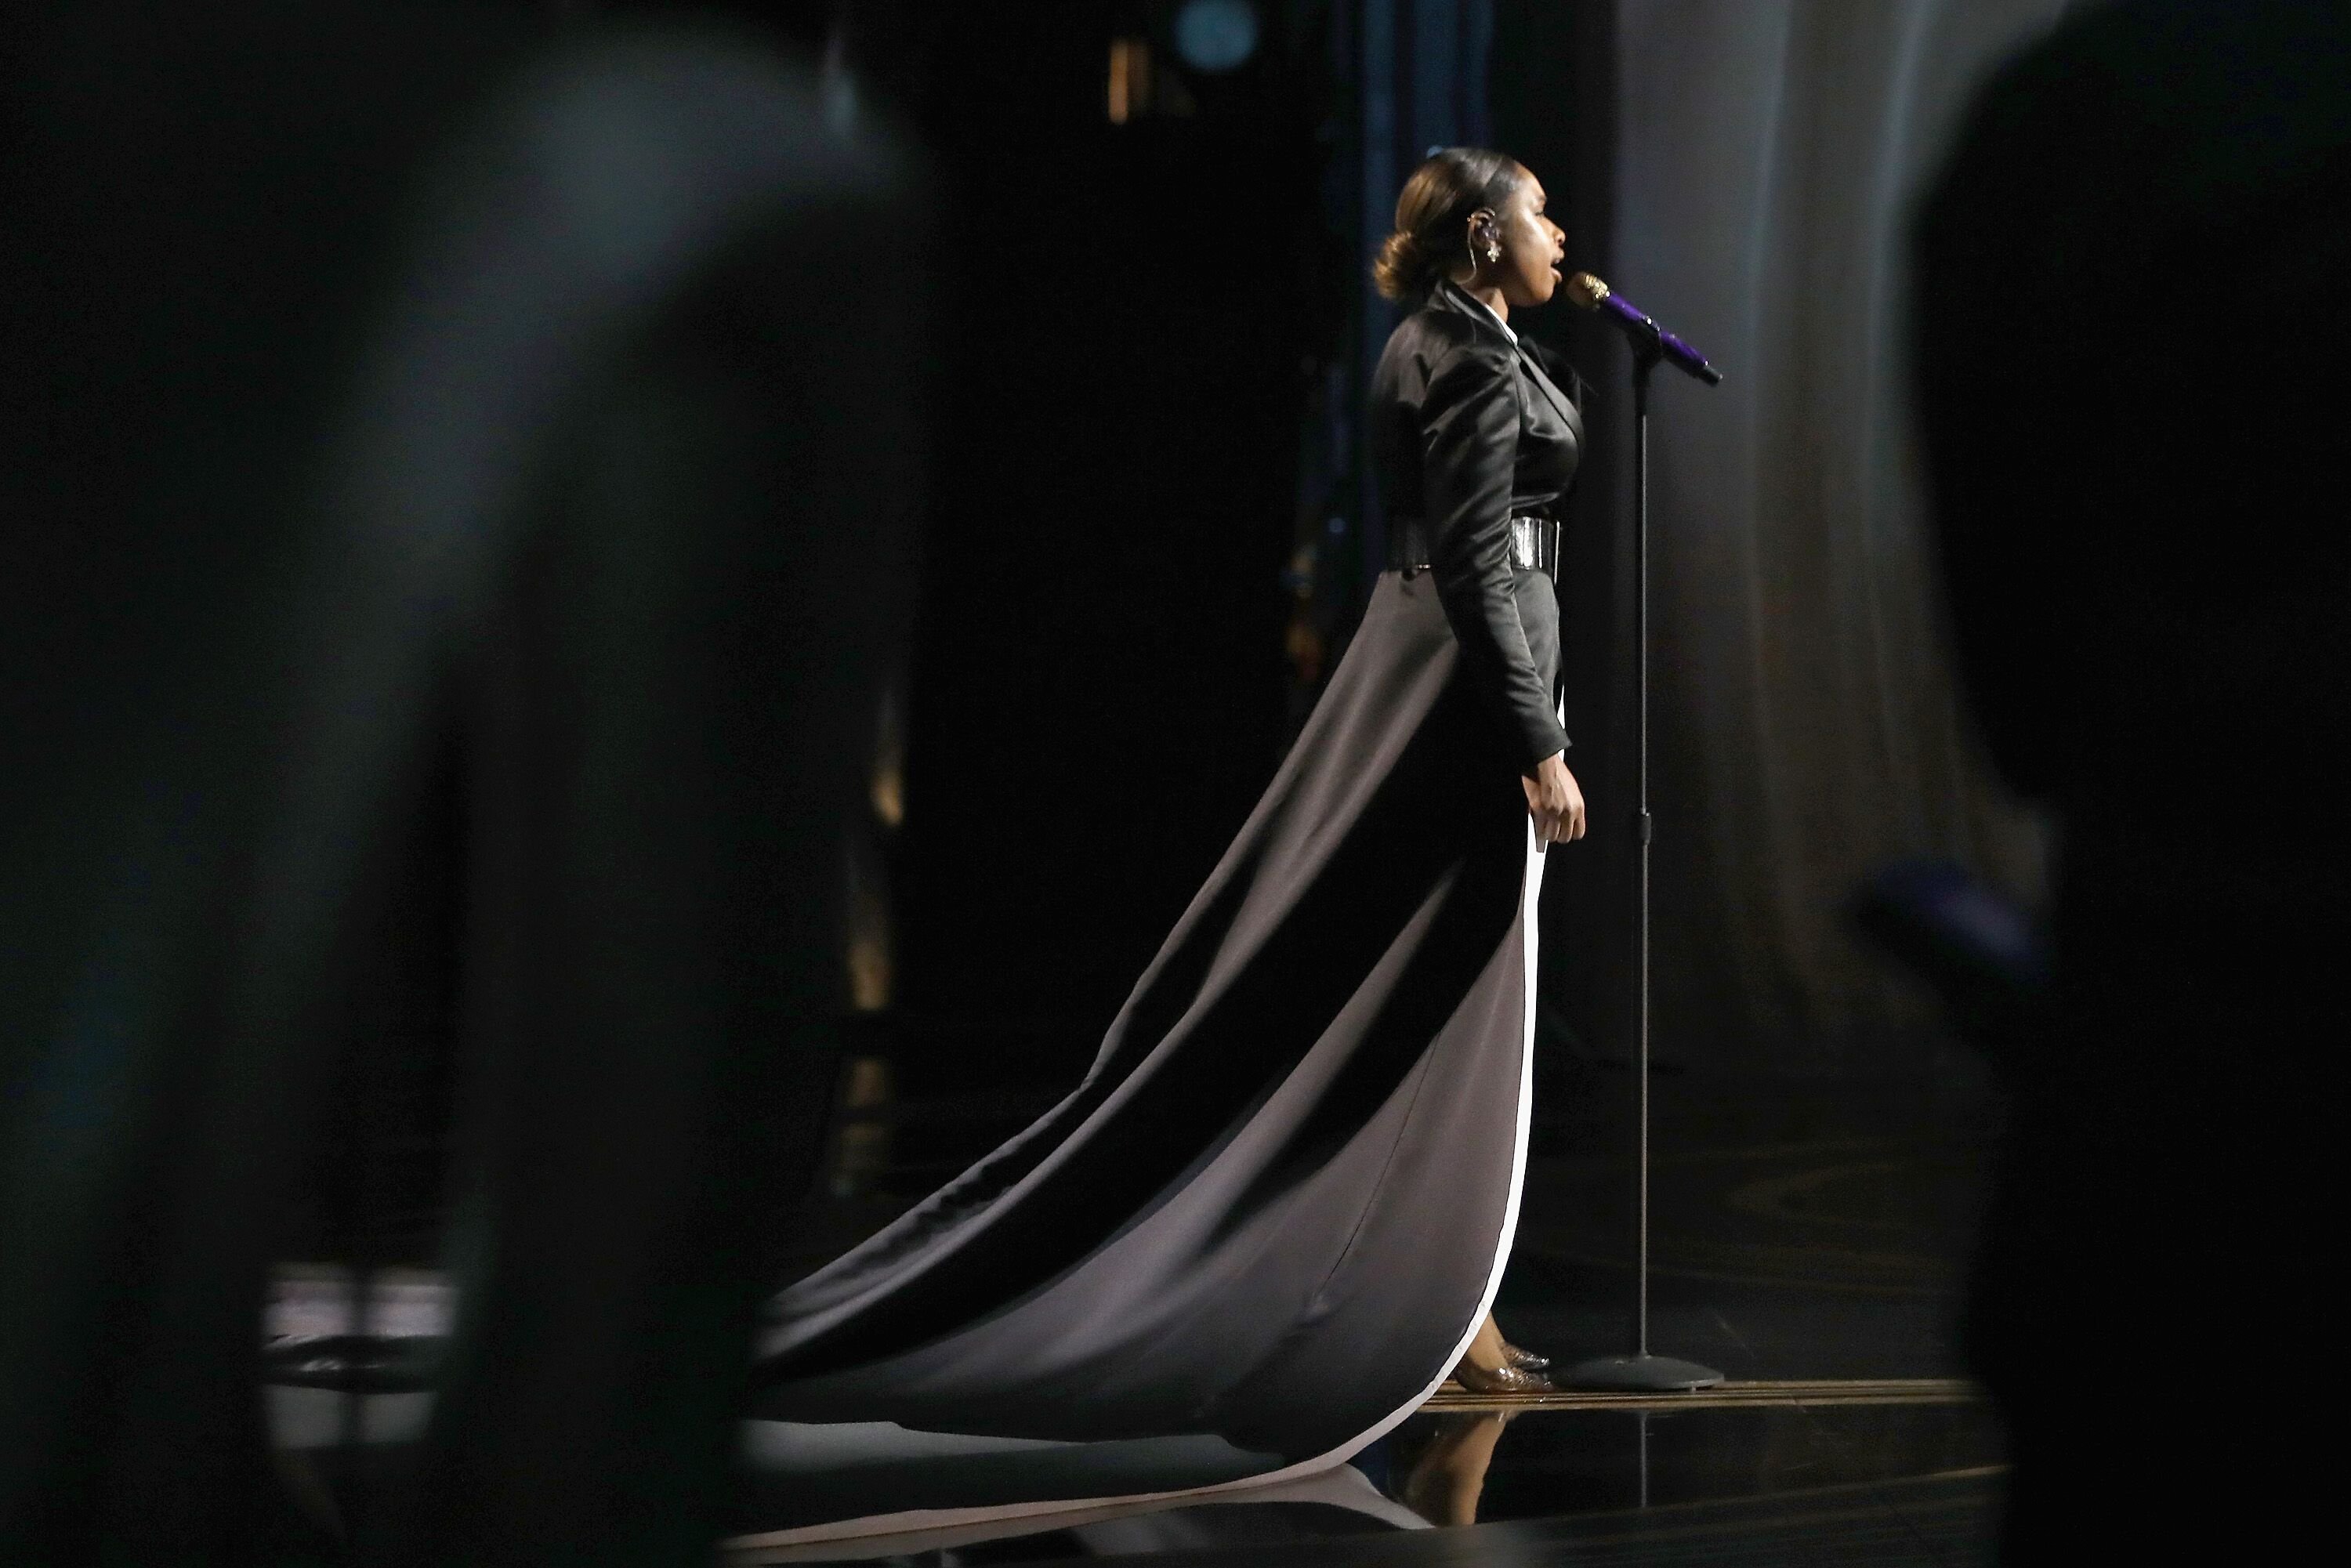 A breathtaking portrait of Jennifer Hudson performing on-stage | Source: Getty Images/GlobalImagesUkraine